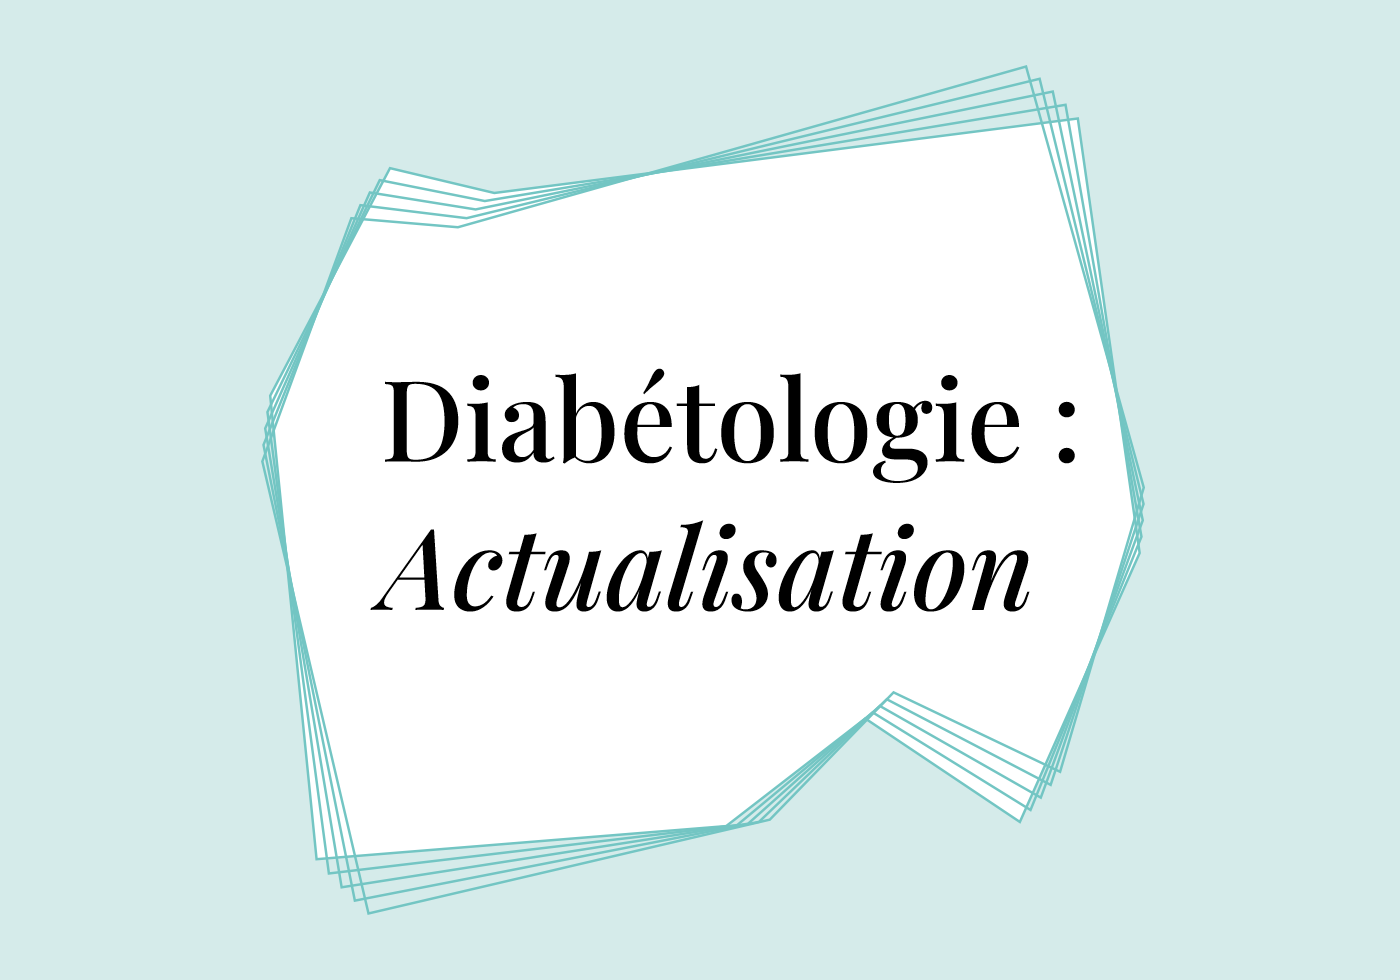 Diabetologie actu 1400x980